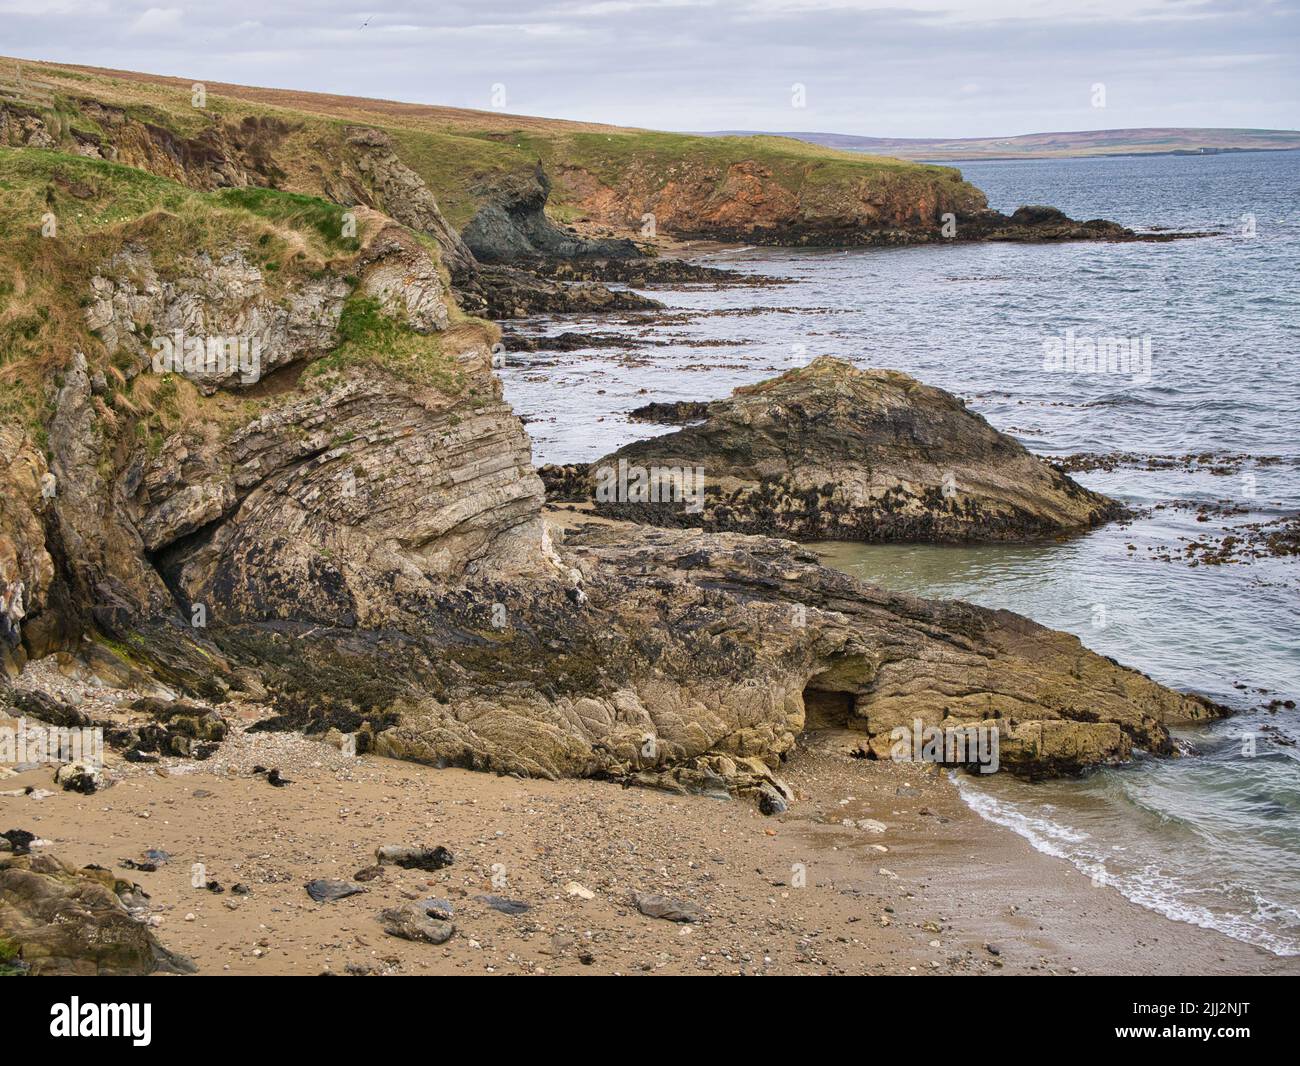 Geological folds and inclines in rock strata in coastal rocks near Ollaberry in Northmavine, Shetland, UK Stock Photo